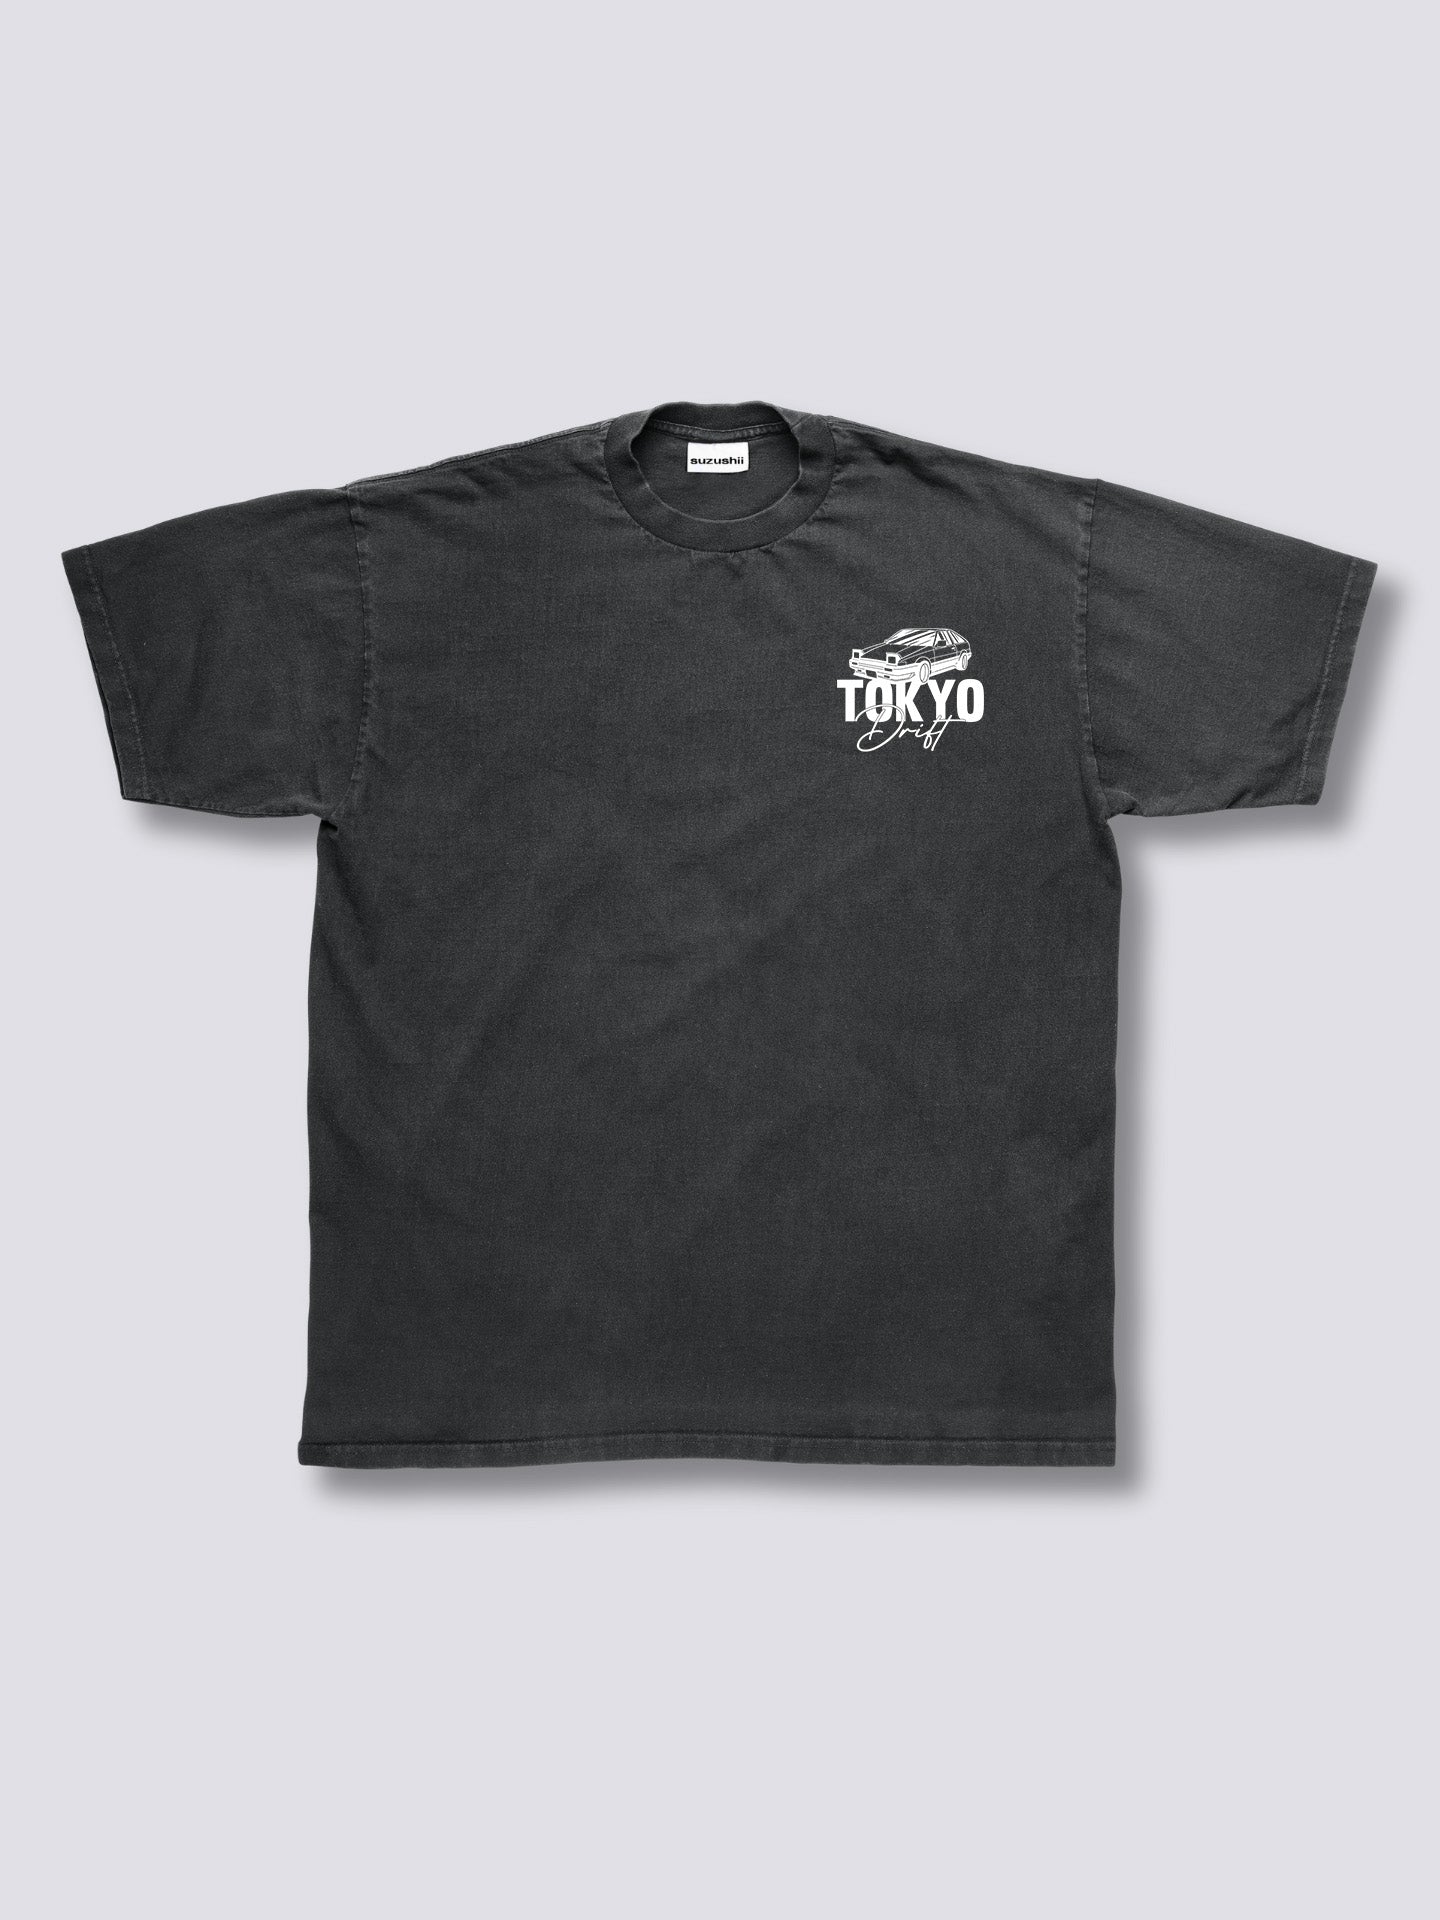 Tokyo Drift Vintage T-Shirt